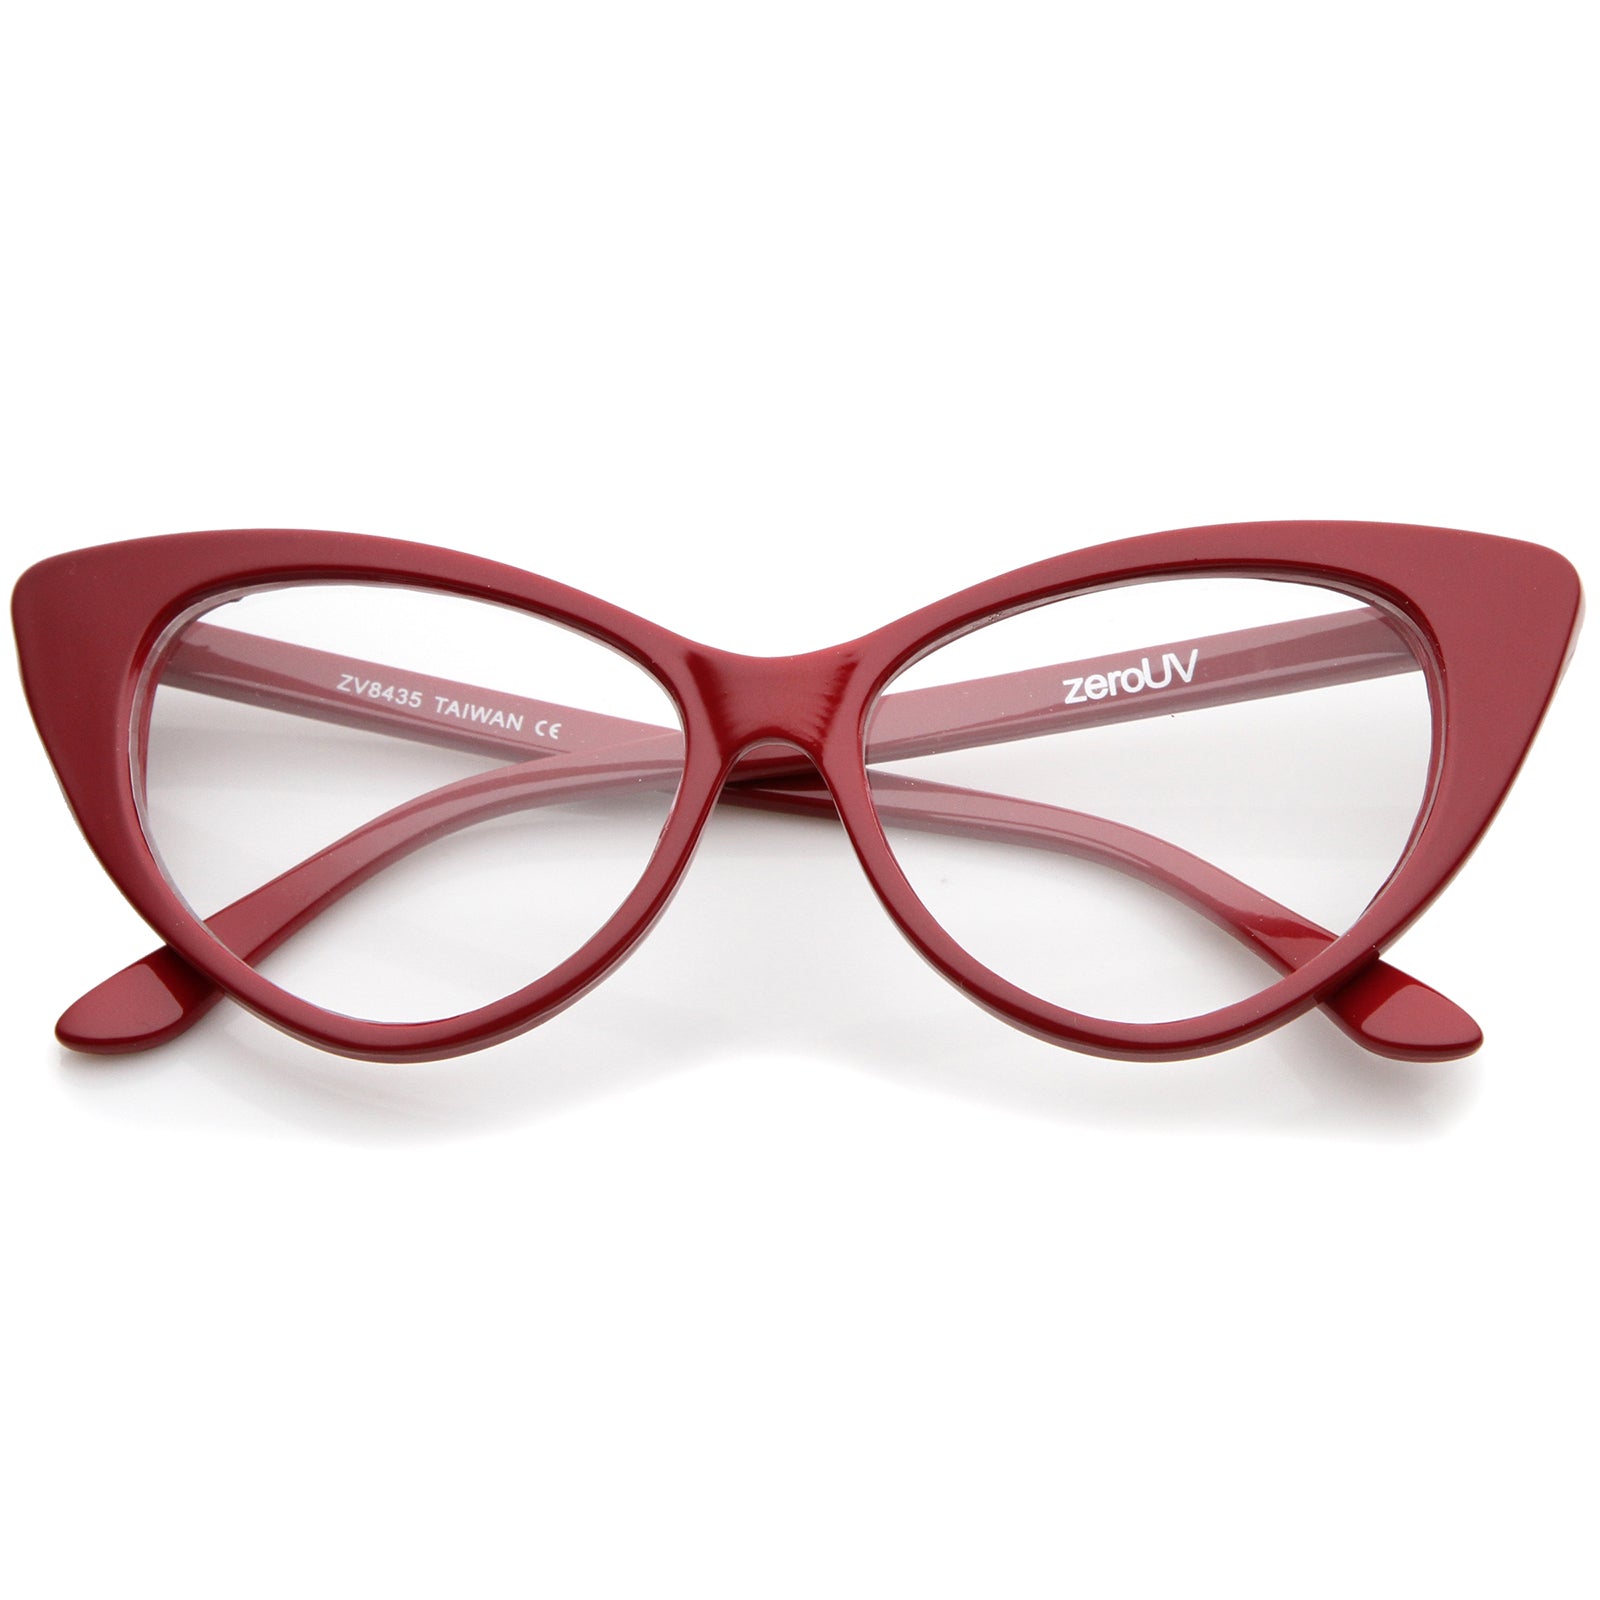 Emblem Eyewear - Super Cat Eye Glasses Vintage Fashion Mod Clear Lens  Eyewear (Red, 0) 